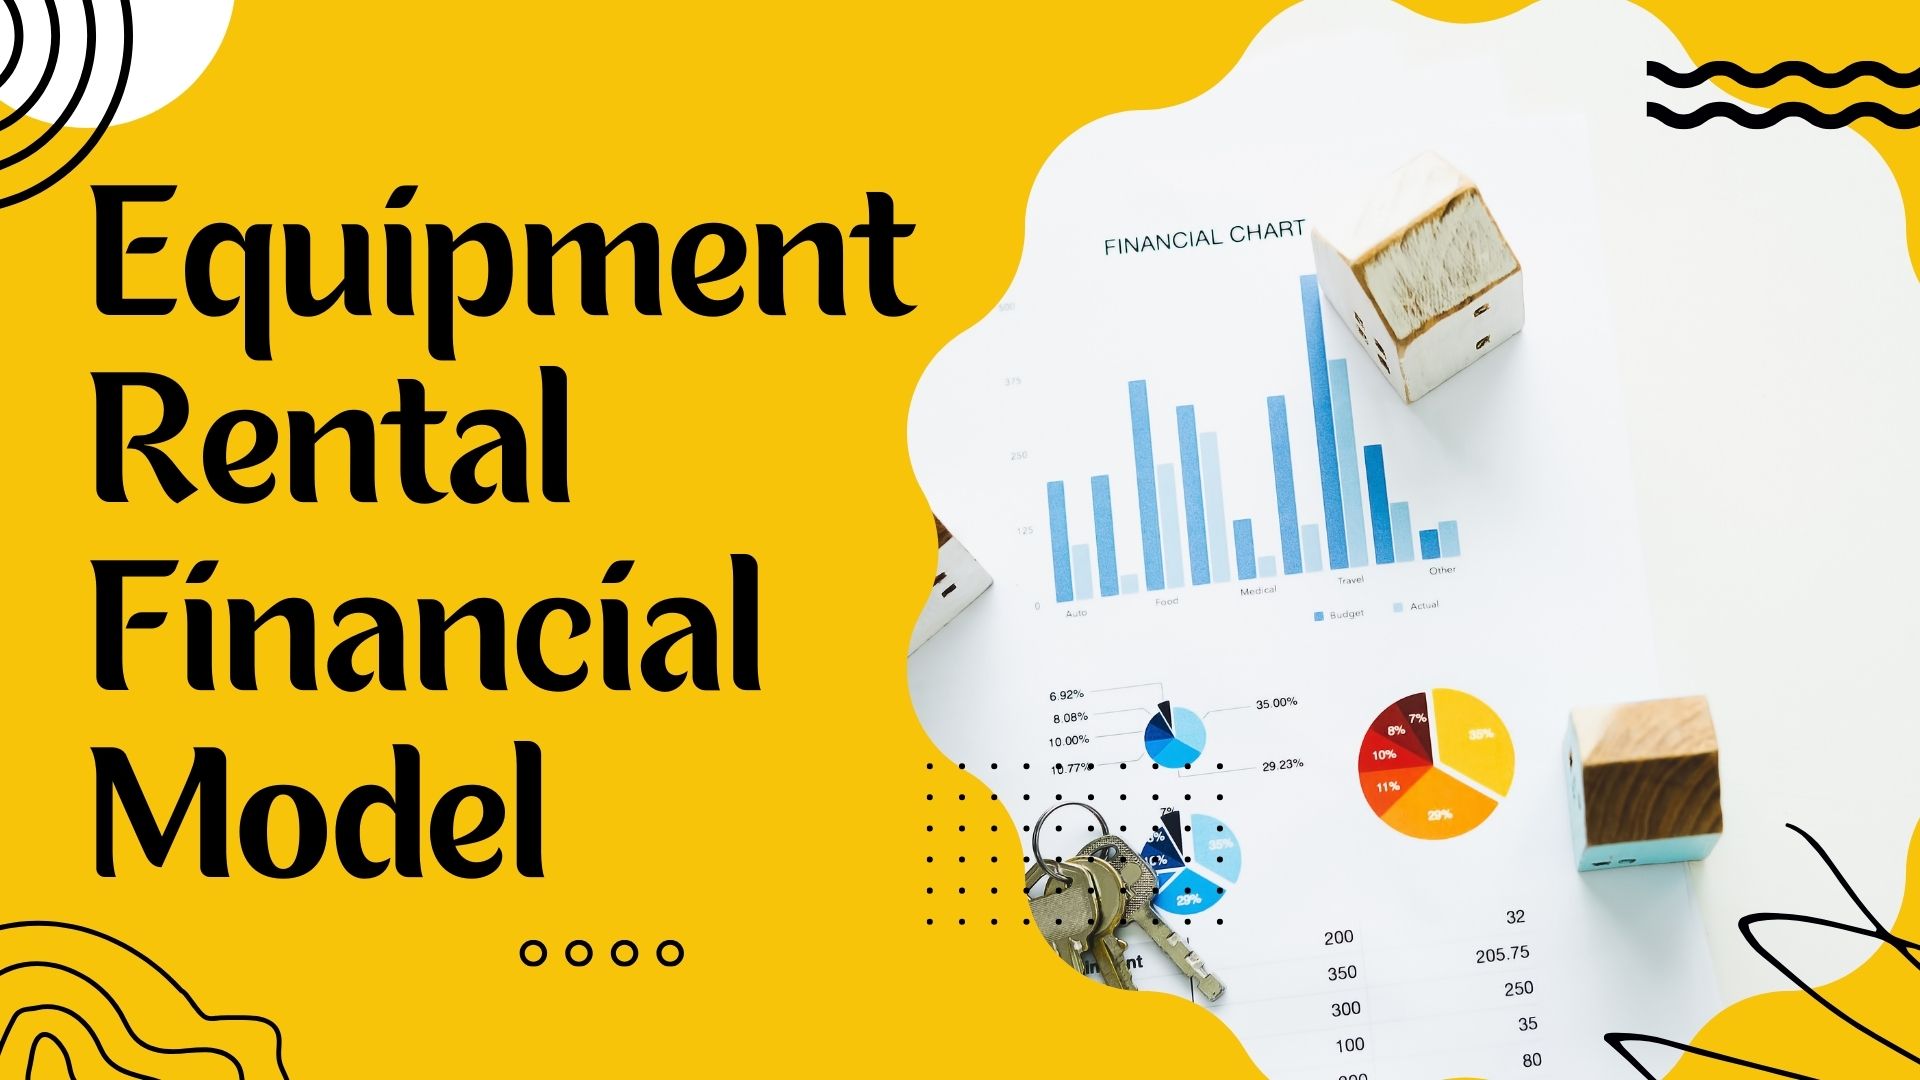 Equipment Rental Financial Model